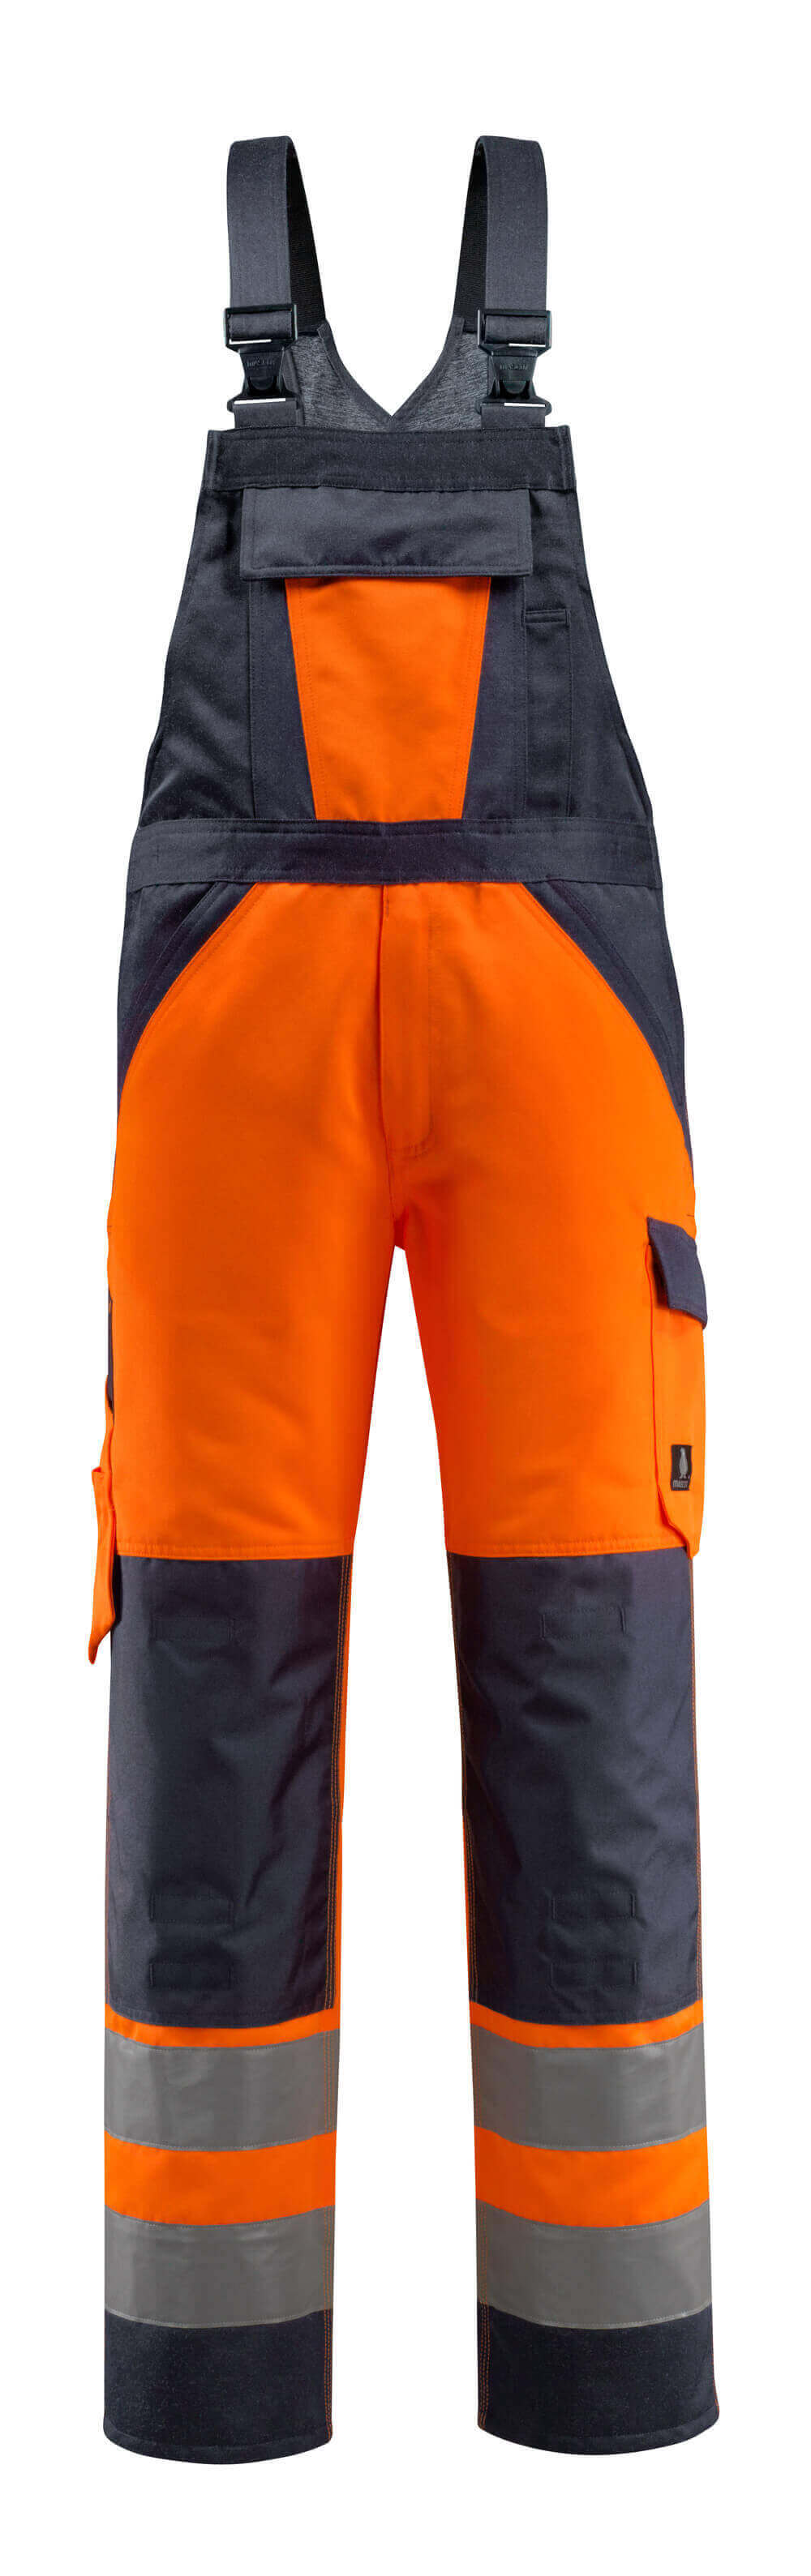 Mascot SAFE LIGHT  Gosford Bib & Brace with kneepad pockets 15969 hi-vis orange/dark navy